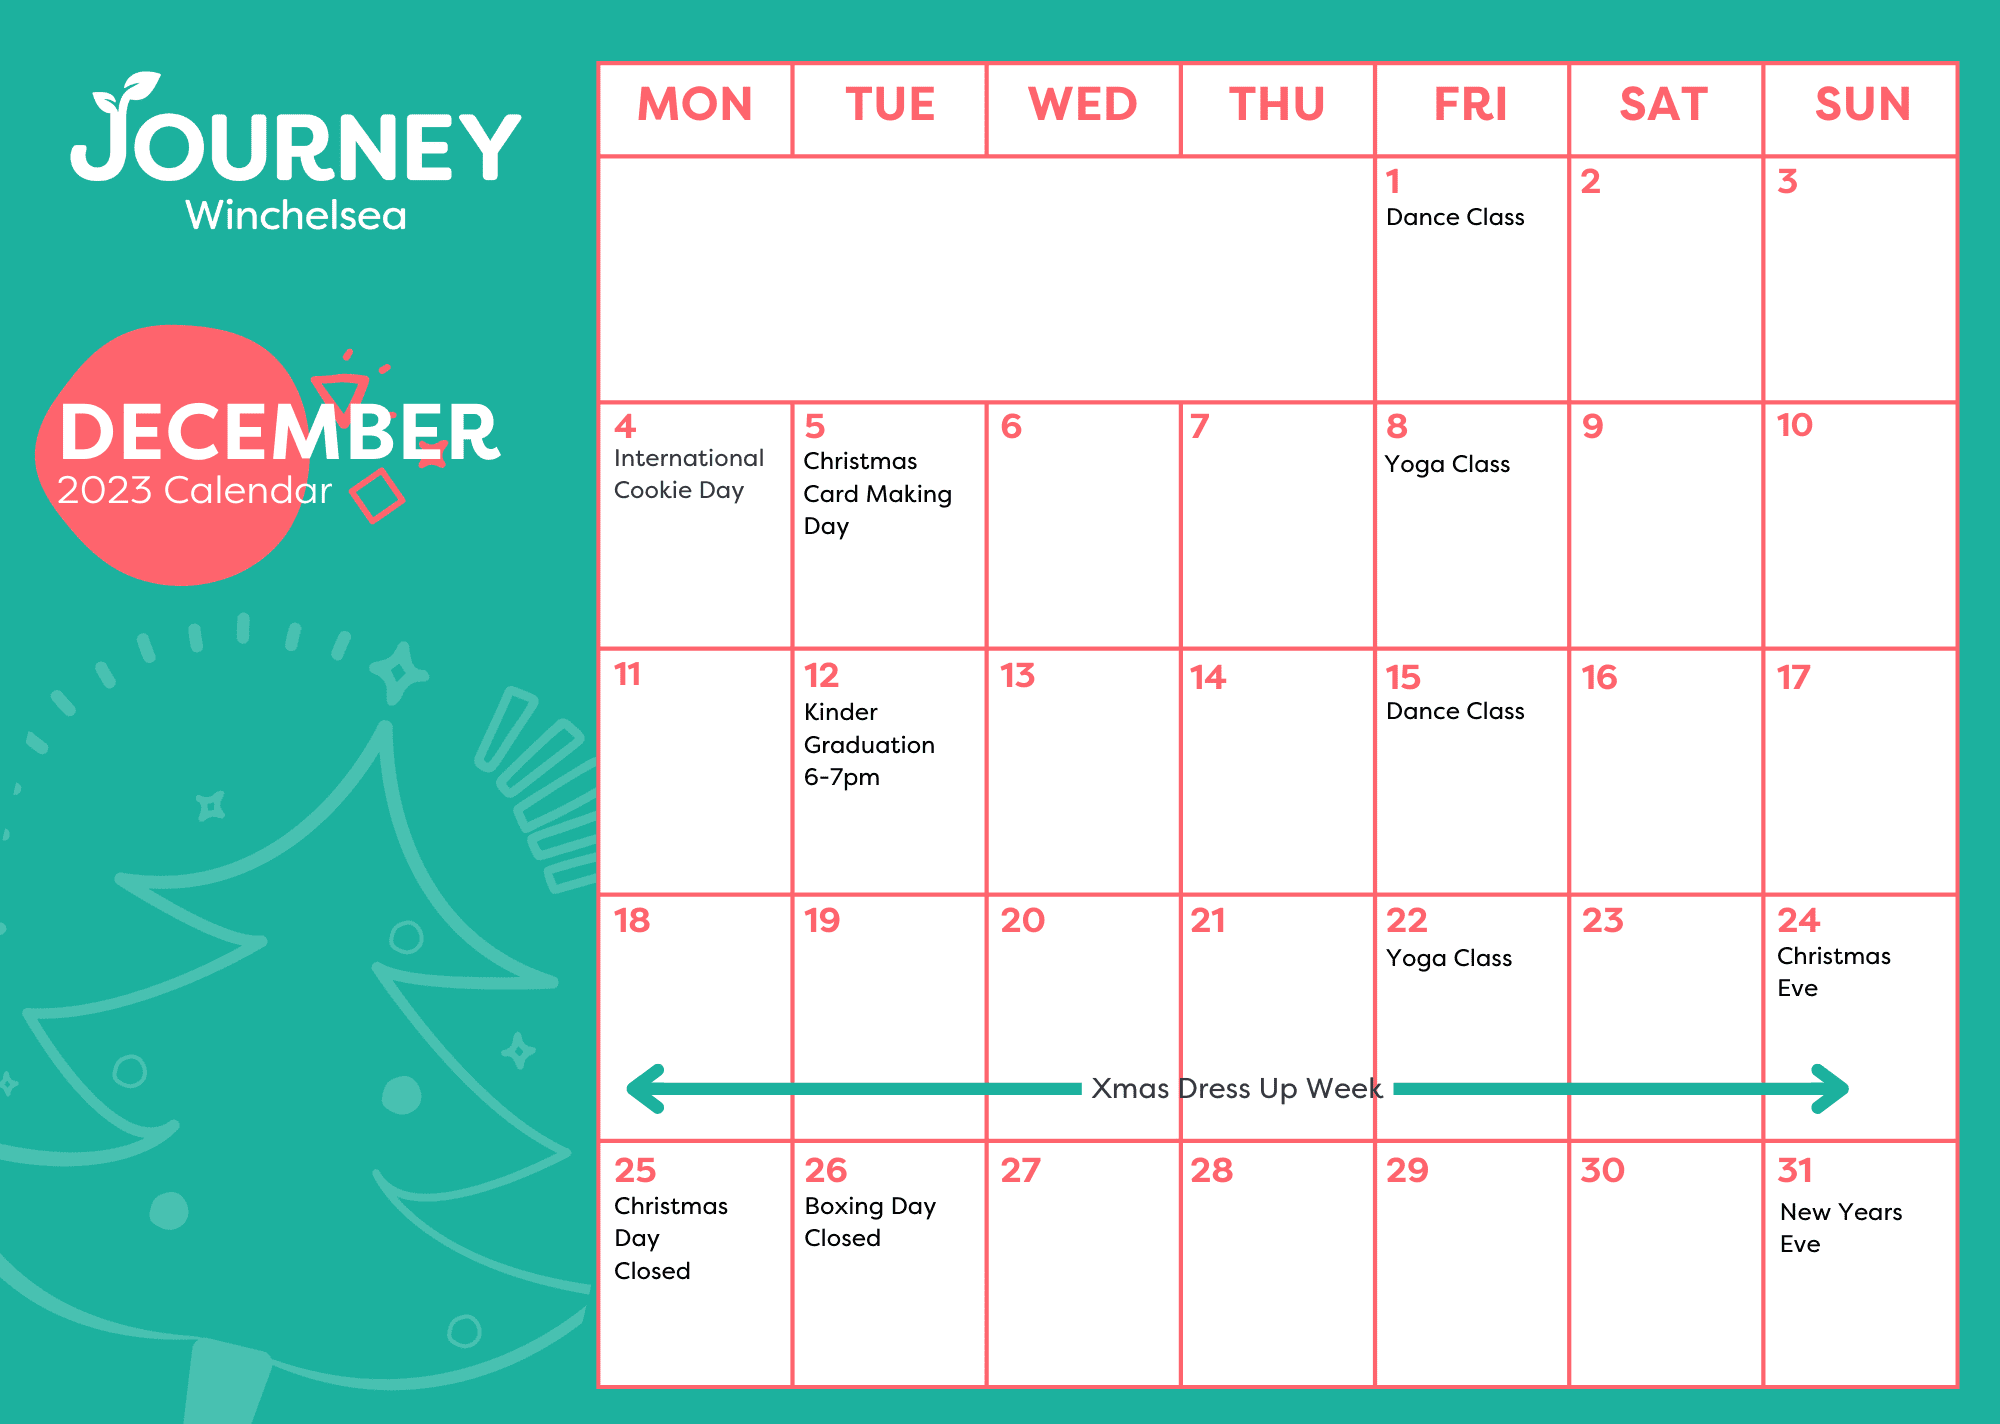 December Winchelsea Calendar